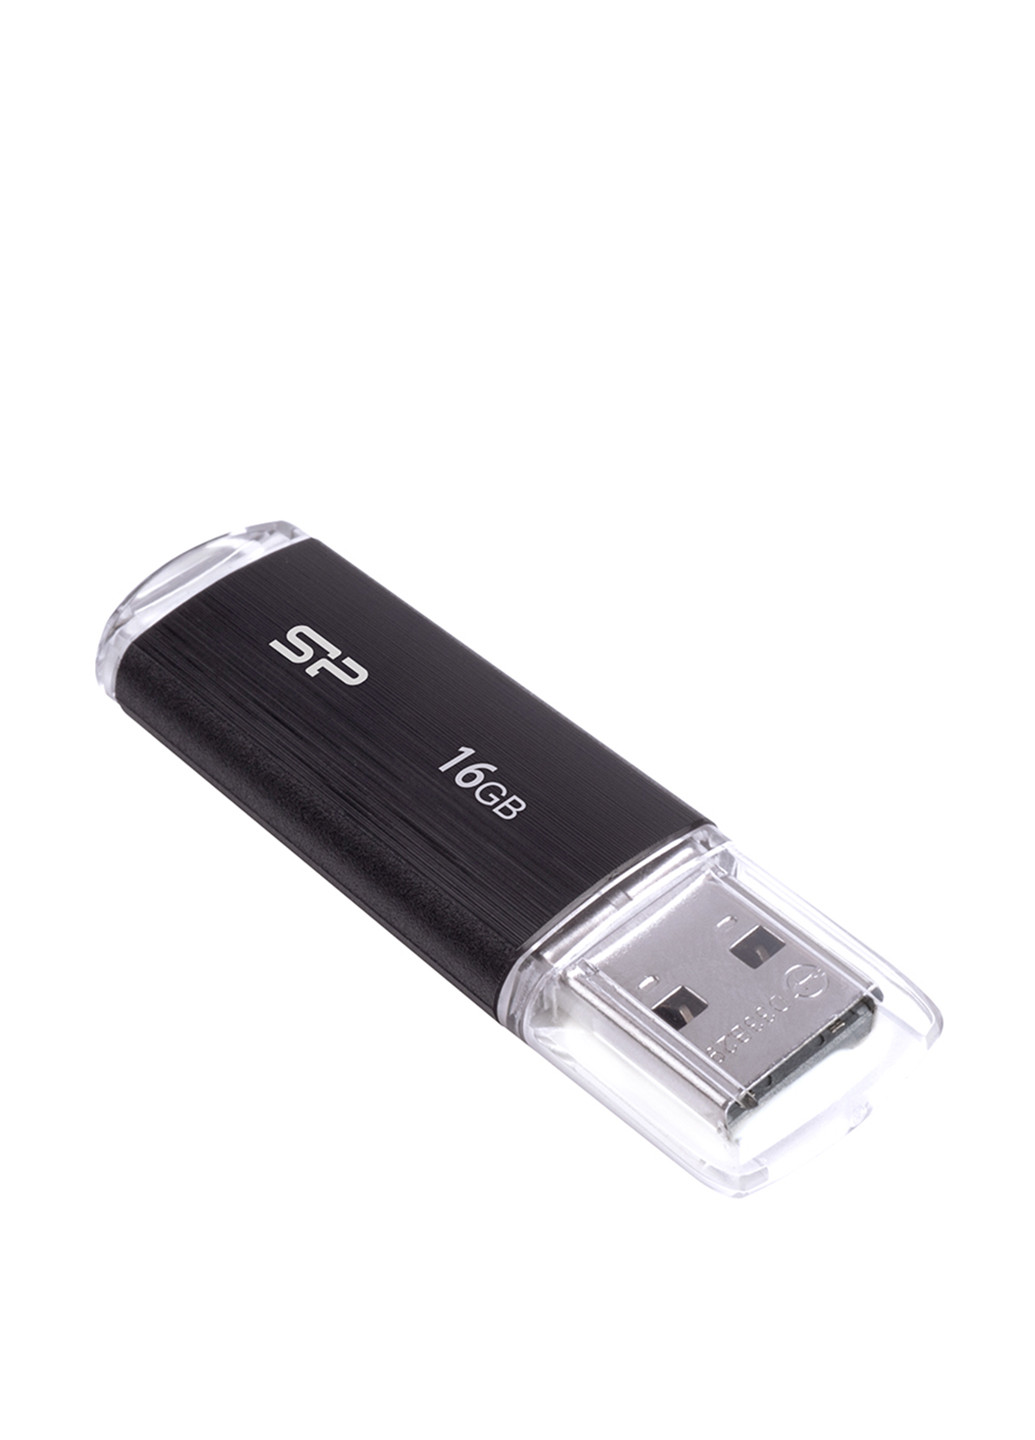 Флеш память USB Ultima U02 16GB USB 2.0 Black (SP016GBUF2U02V1K) Silicon Power флеш память usb silicon power ultima u02 16gb usb 2.0 black (sp016gbuf2u02v1k) (130221133)